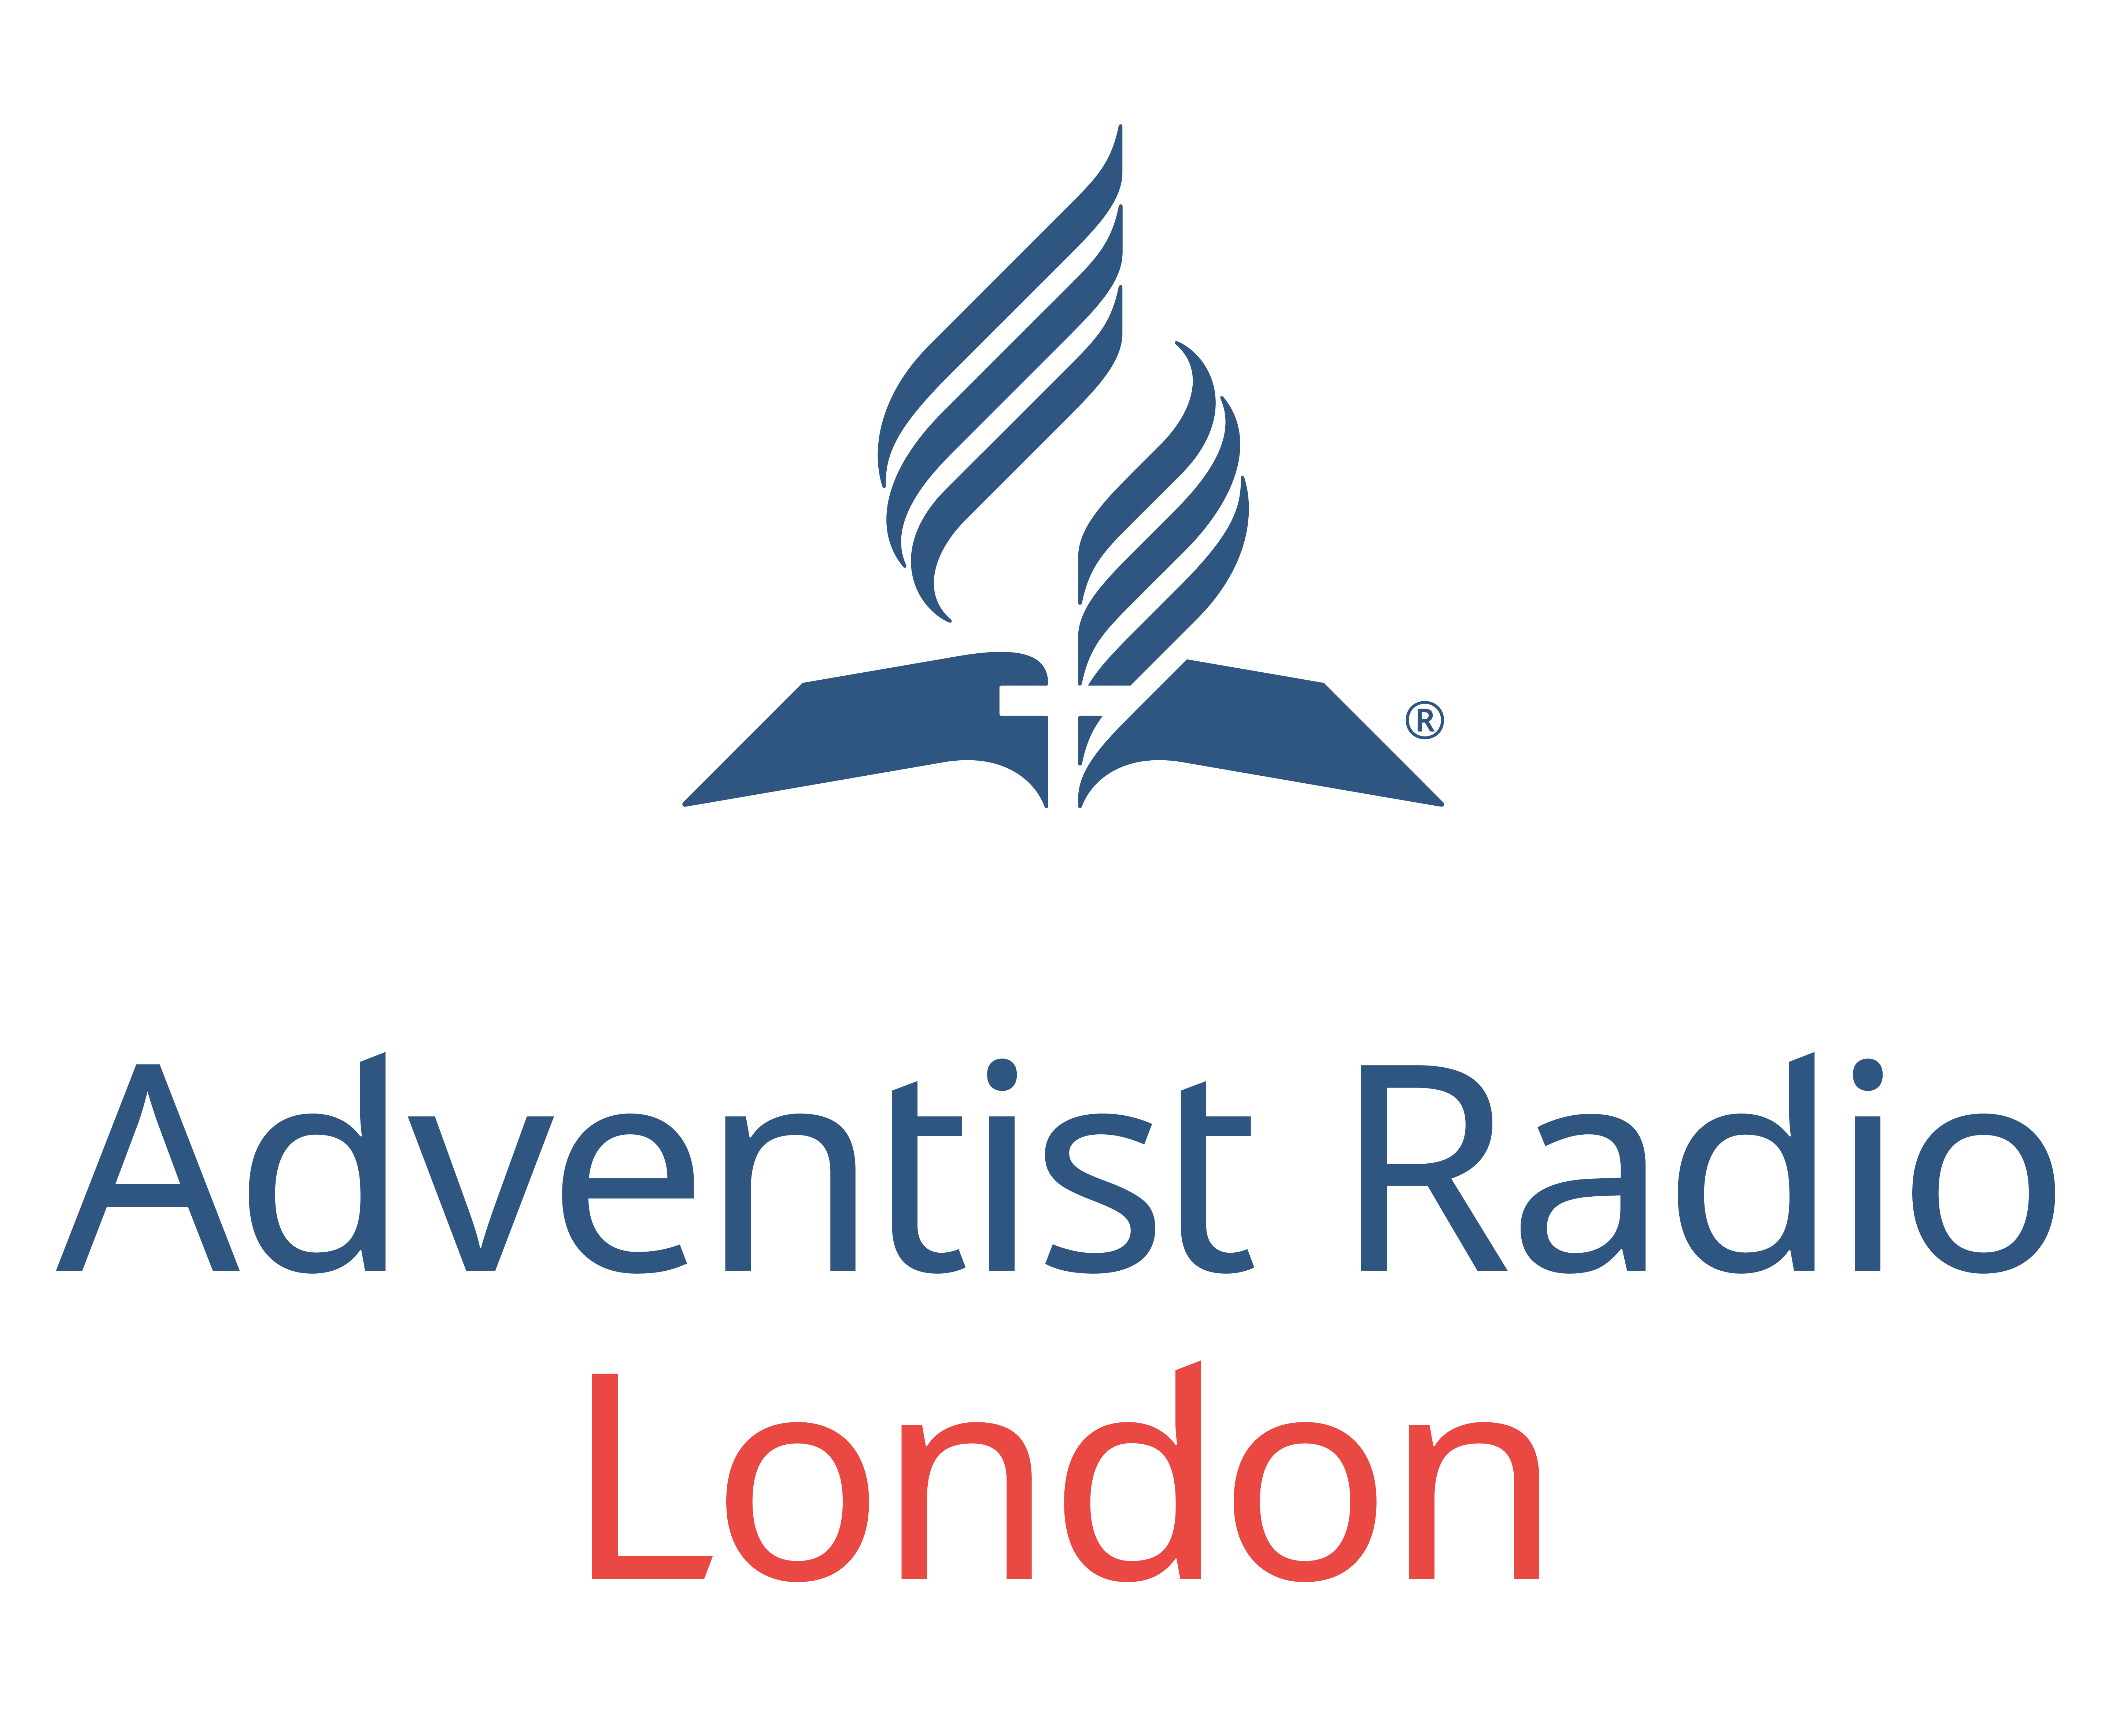 Adventist radio london